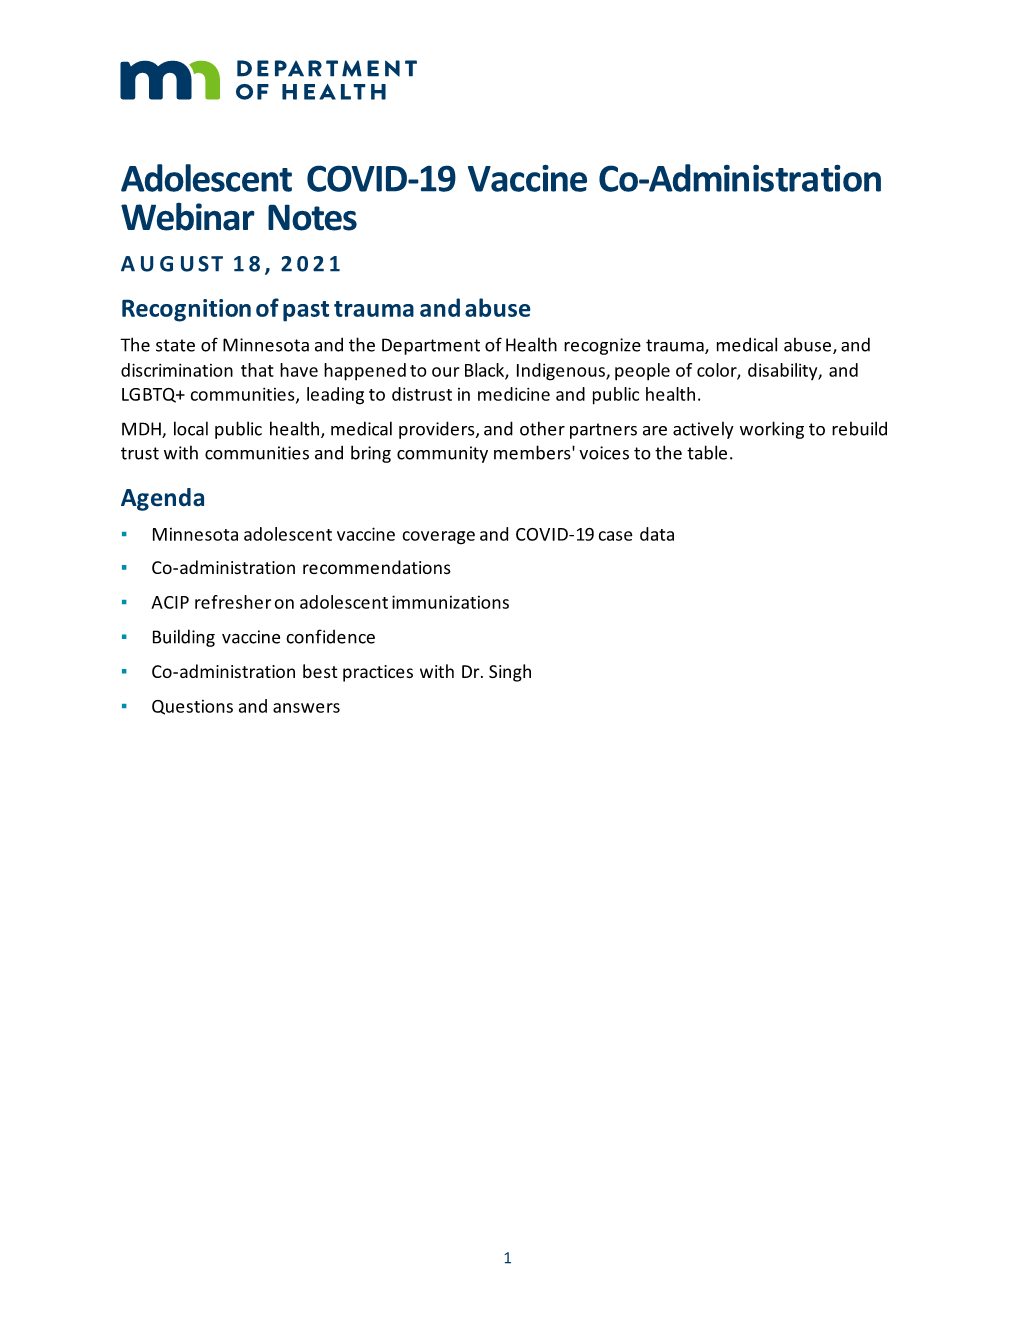 Adolescent COVID-19 Vaccine Co-Administration Webinar Notes.Pdf